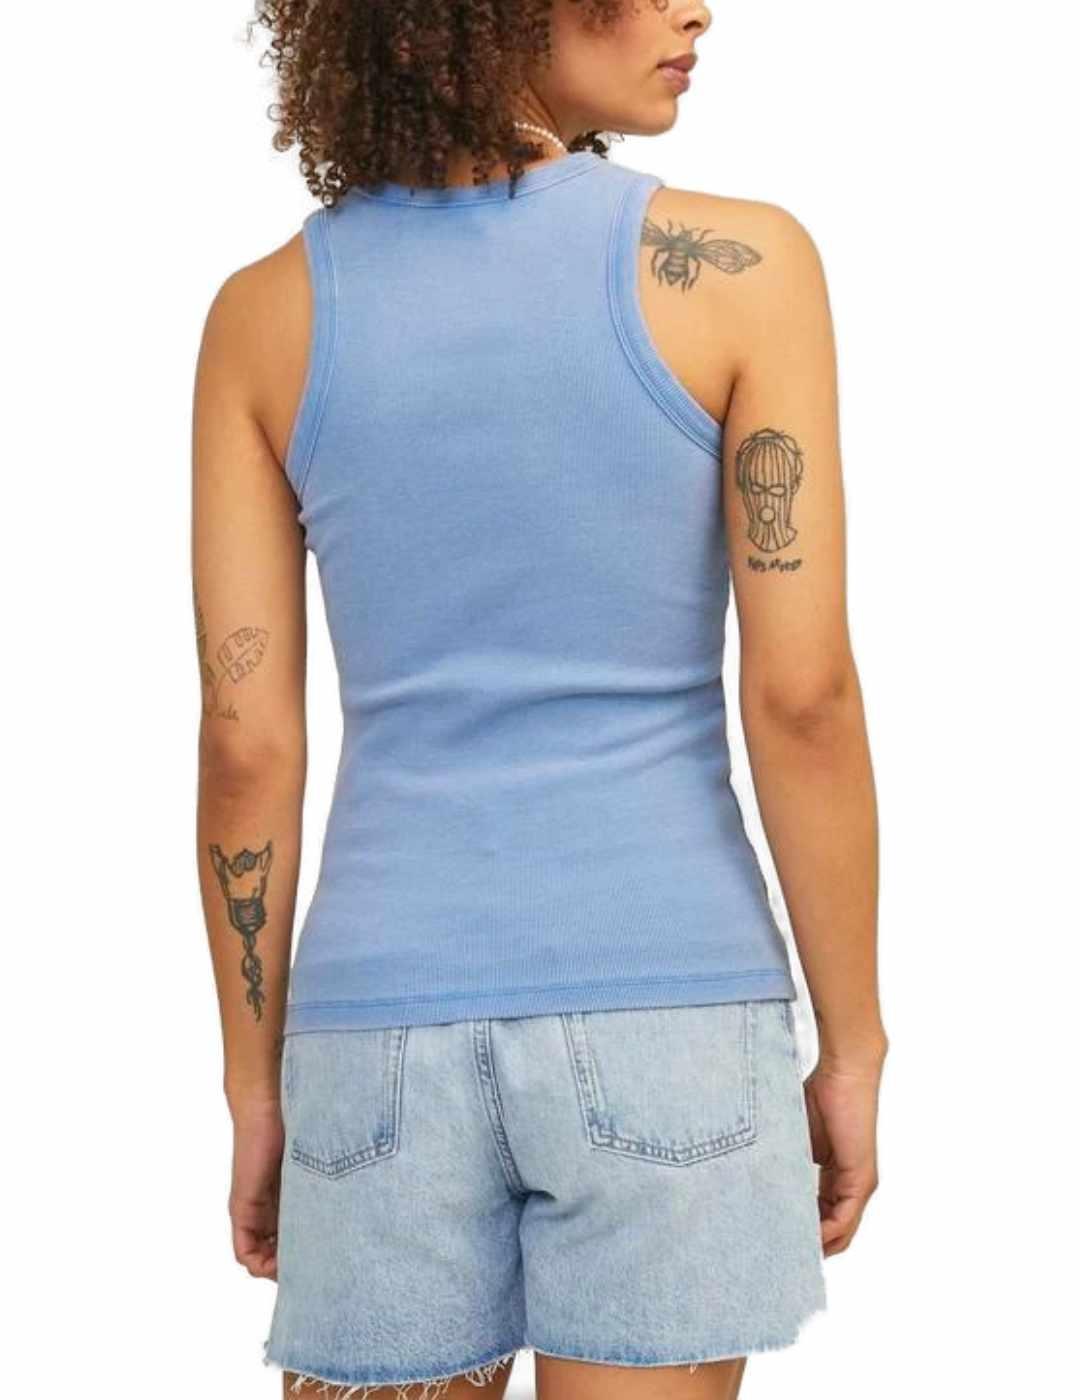 Camiseta JJXX Forest azul metalizado tirantes ajustada mujer